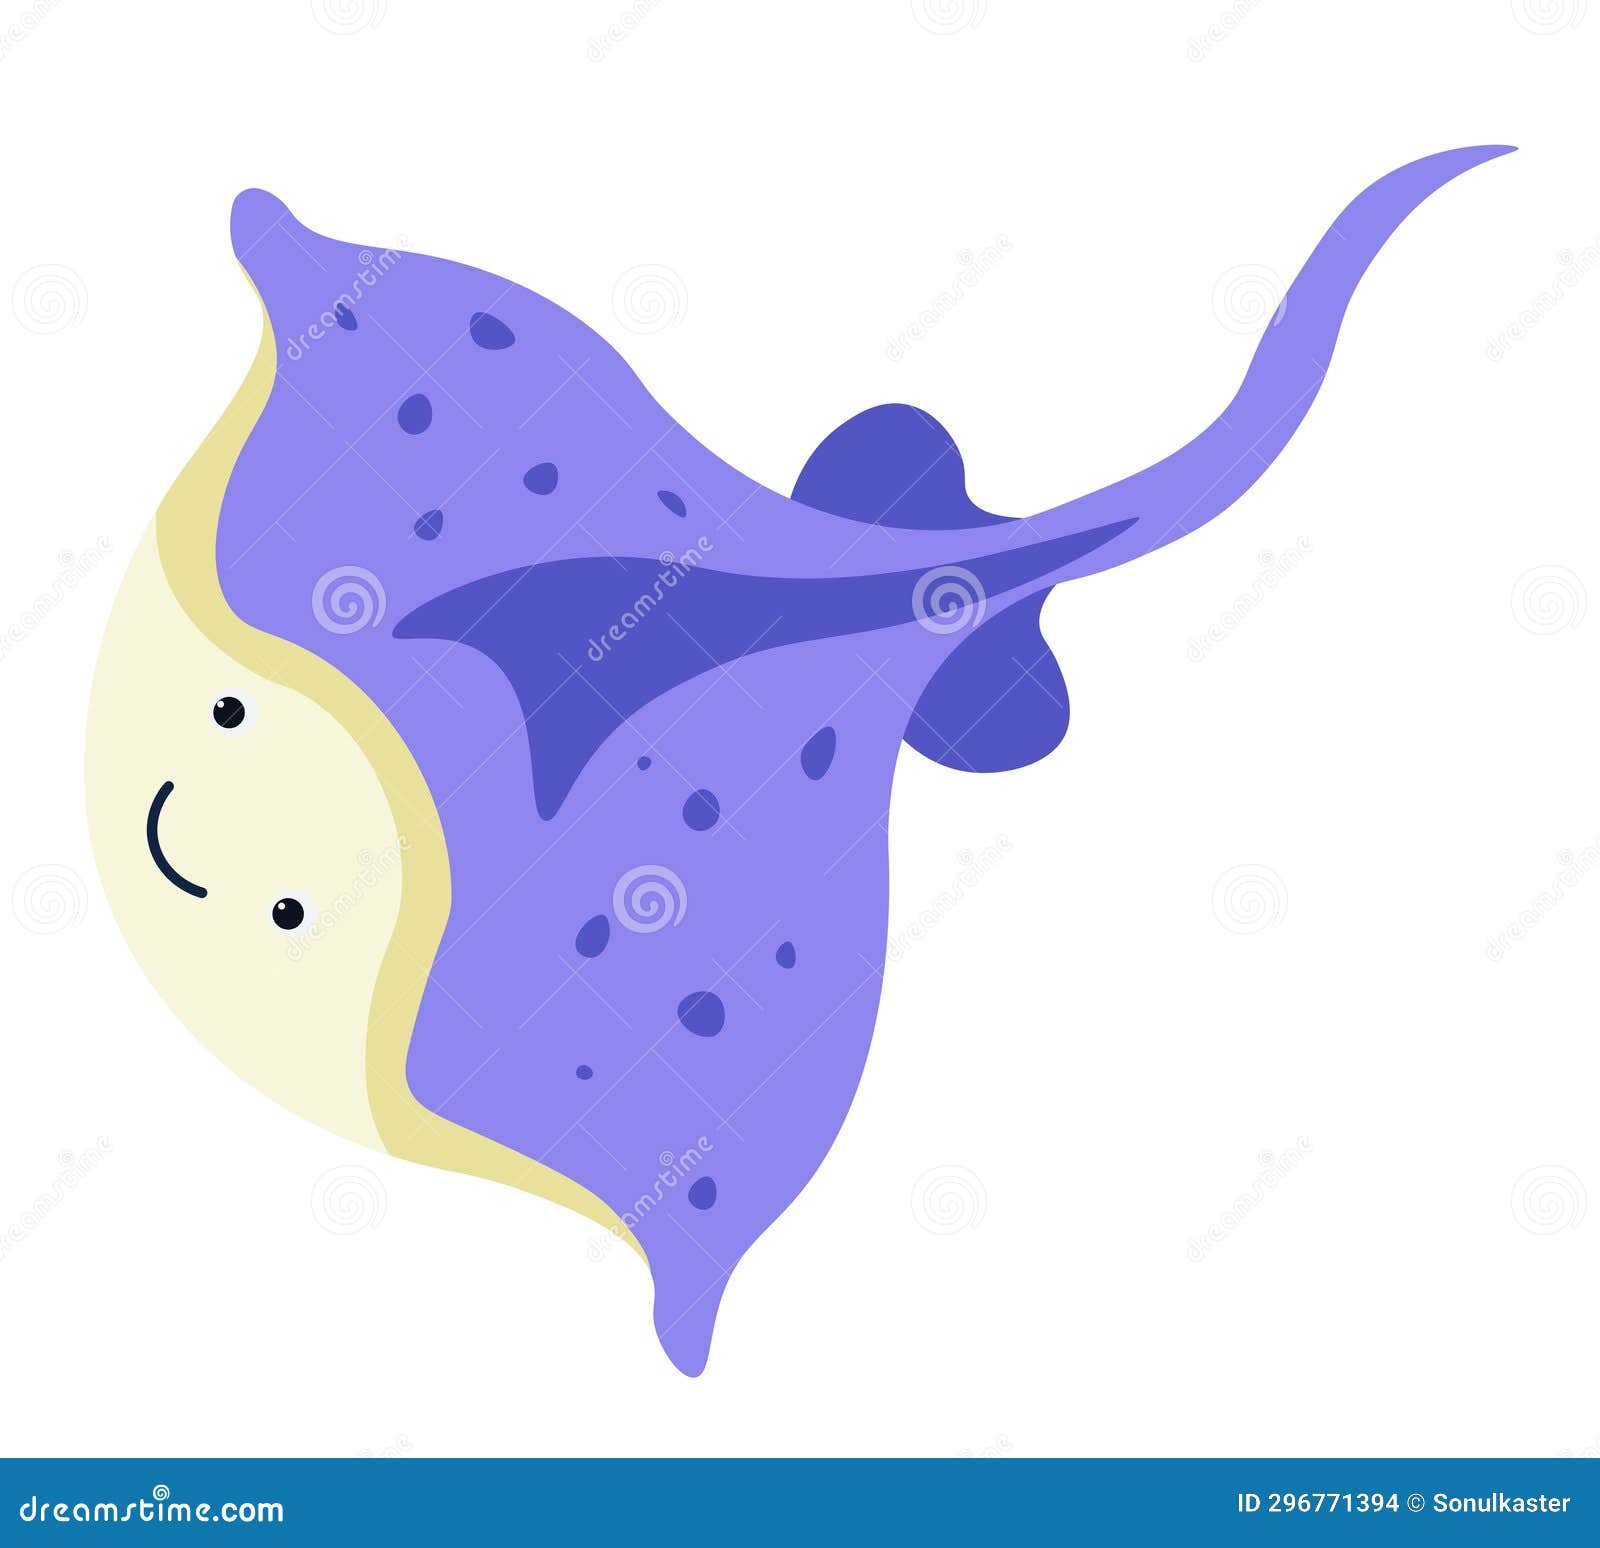 https://thumbs.dreamstime.com/z/stingray-fish-sea-animal-floating-underwater-eagle-ray-isolated-marine-ocean-creature-devilfish-giant-aquatic-cute-smiling-296771394.jpg